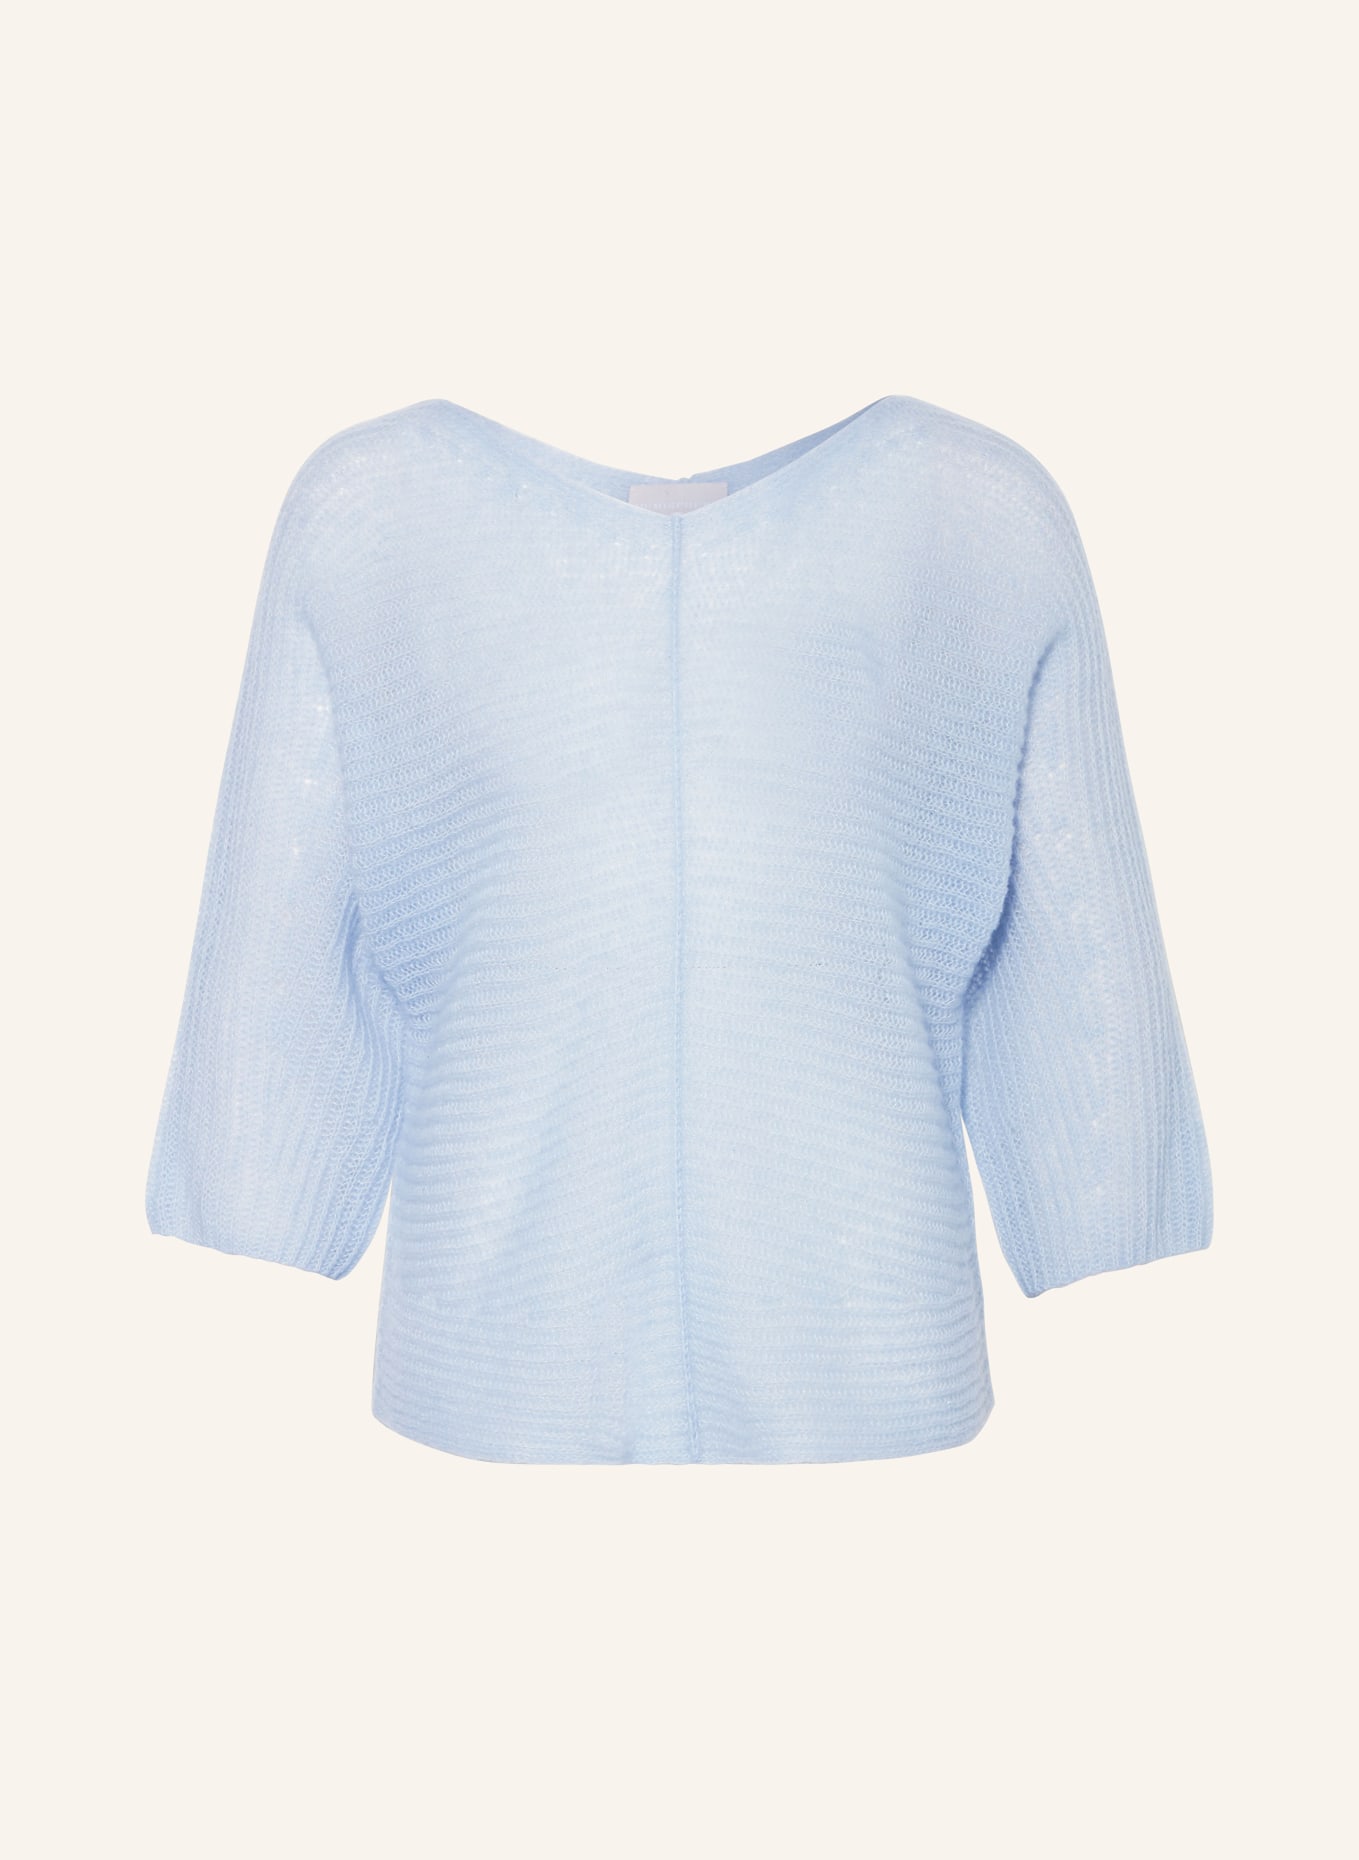 HEMISPHERE Cashmere-Pullover mit 3/4-Arm, Farbe: HELLBLAU (Bild 1)